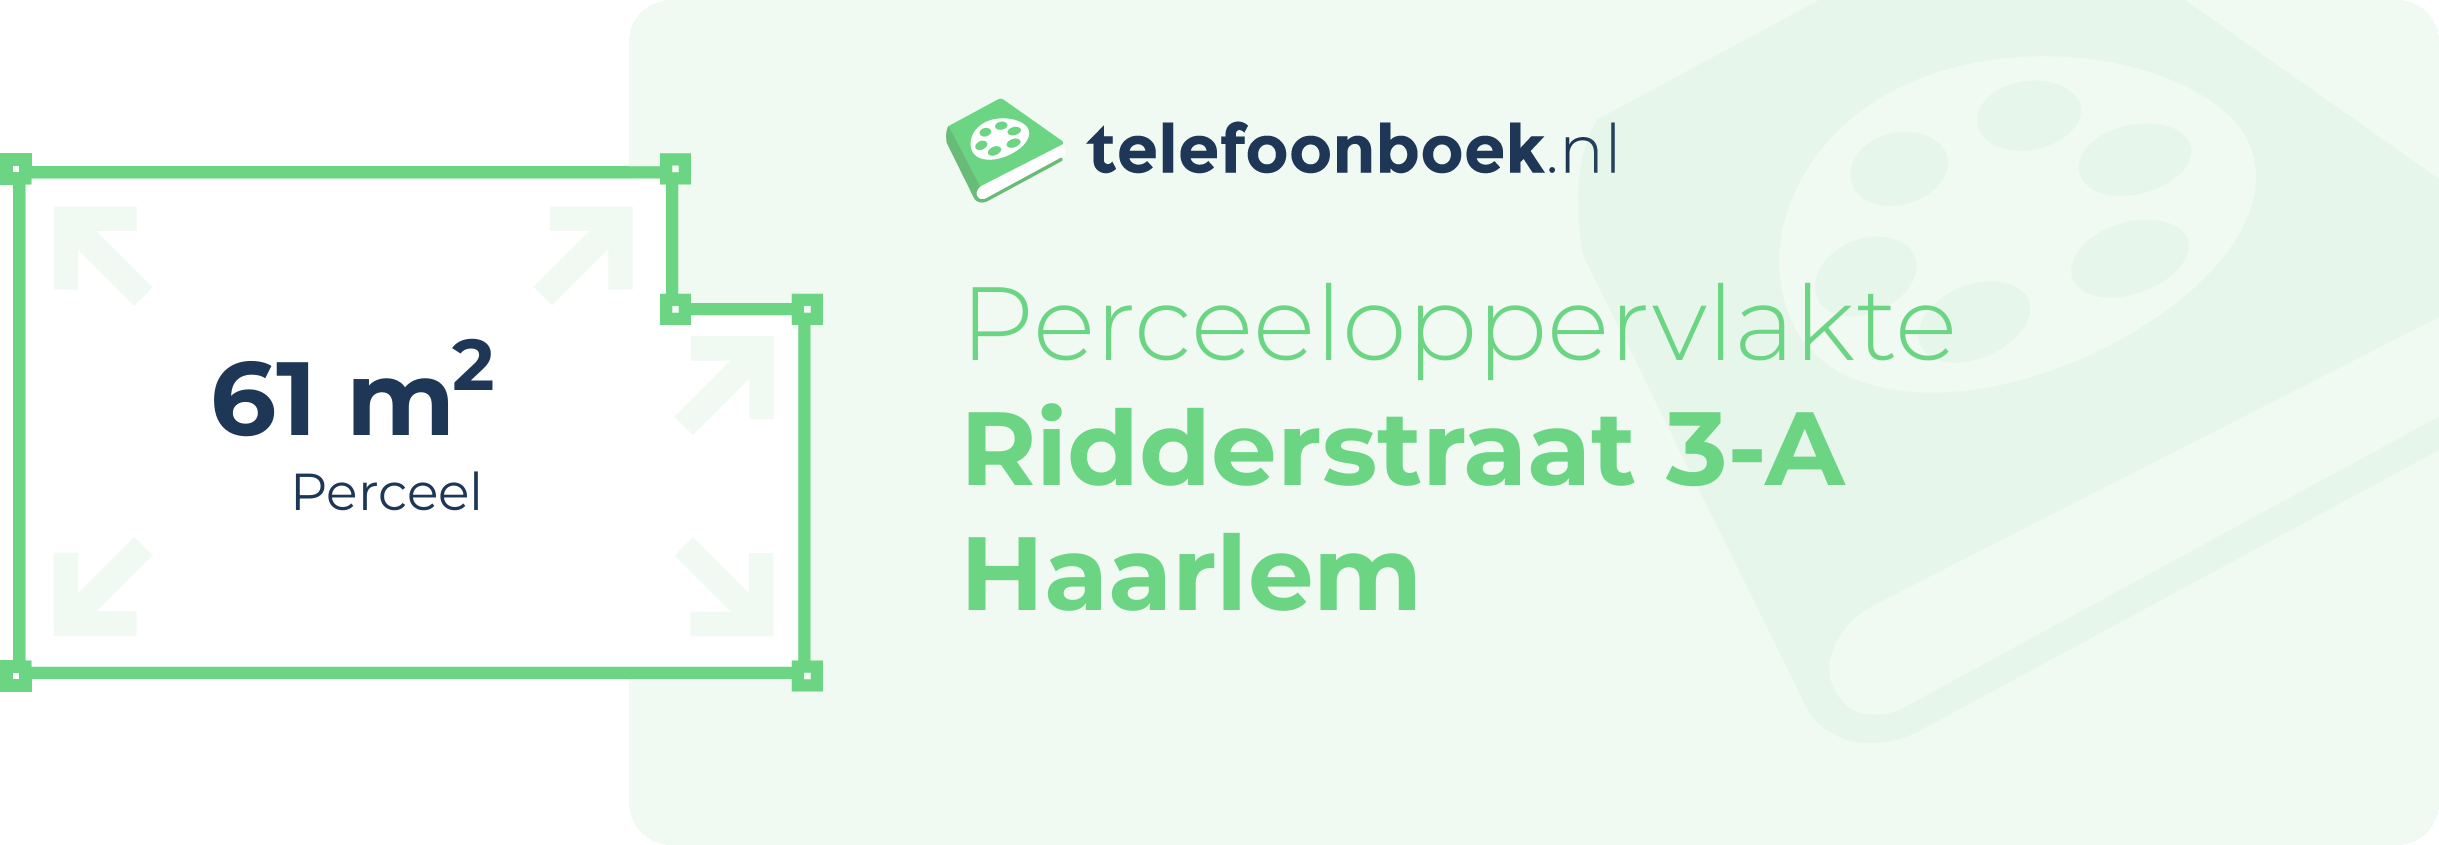 Perceeloppervlakte Ridderstraat 3-A Haarlem